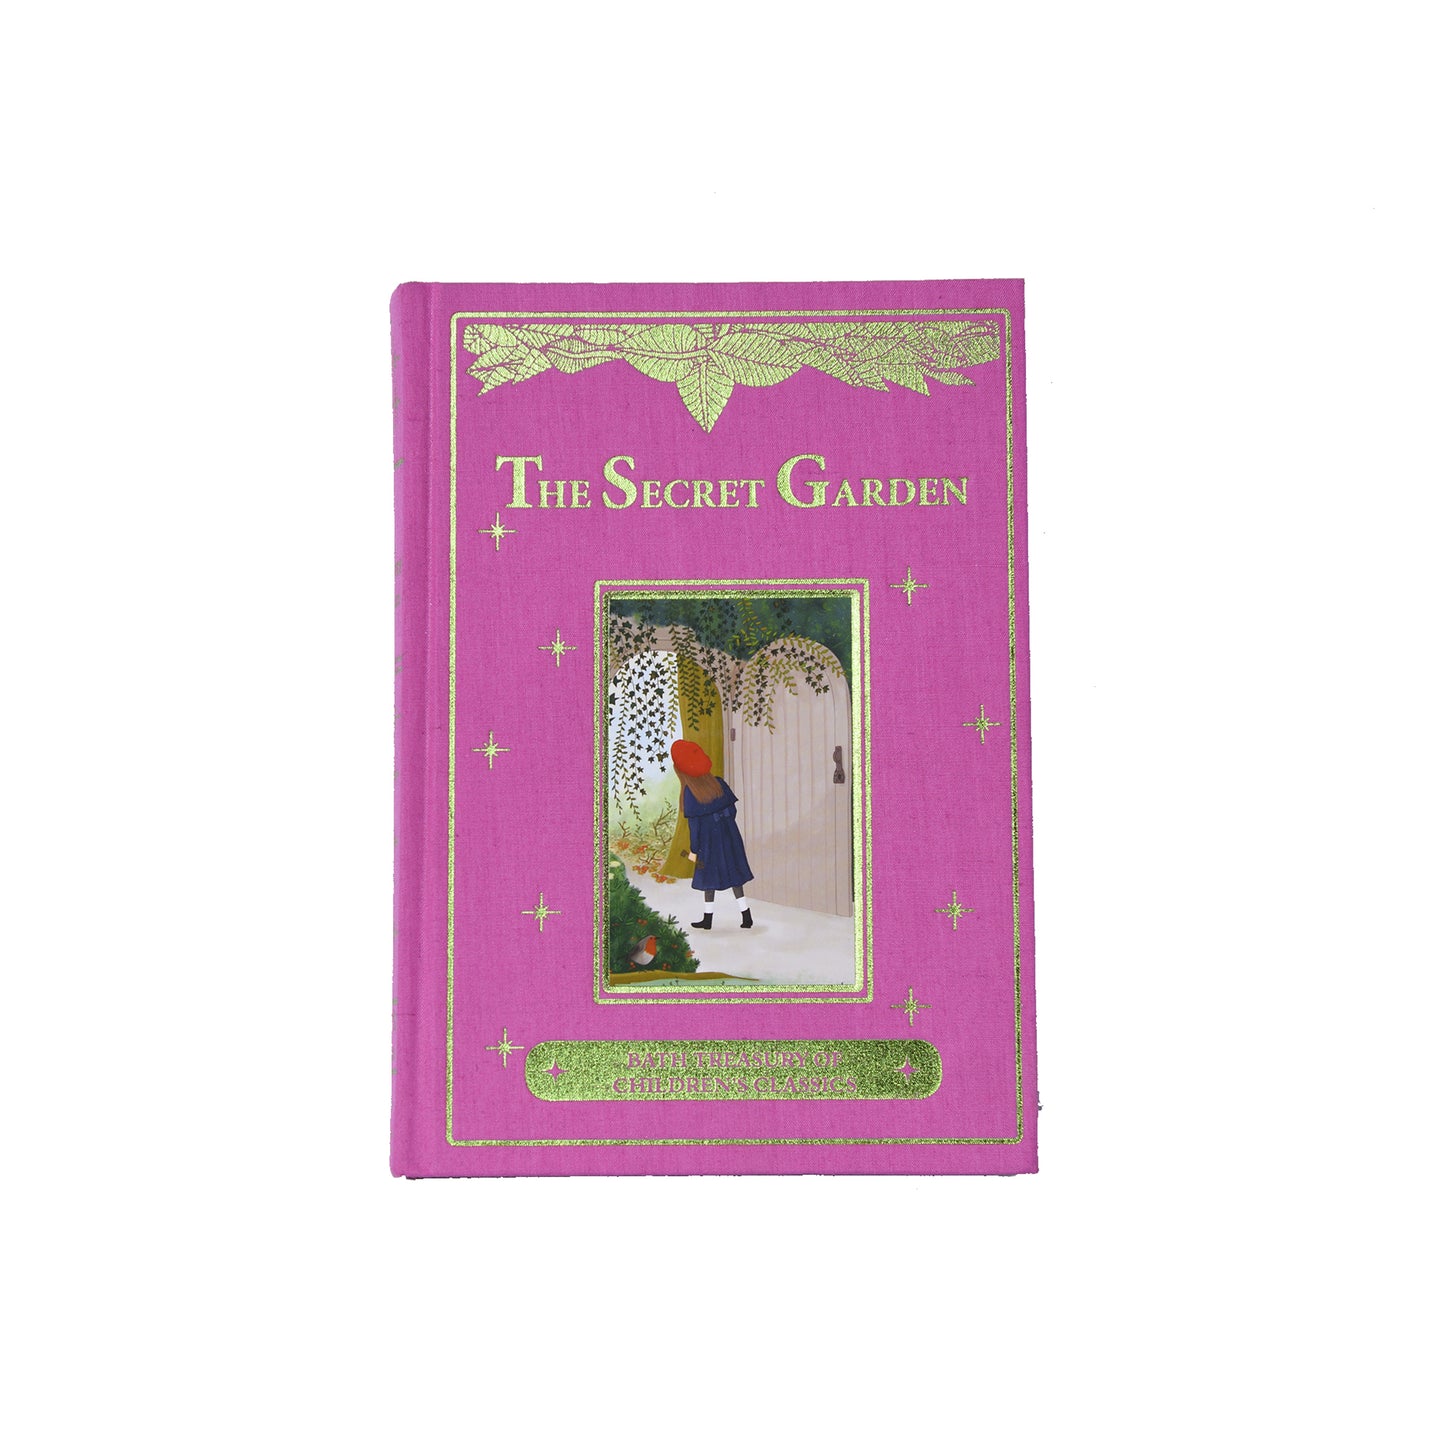 The Secret Garden (Bath Treasury of Children's Classics) (Bath Classics)